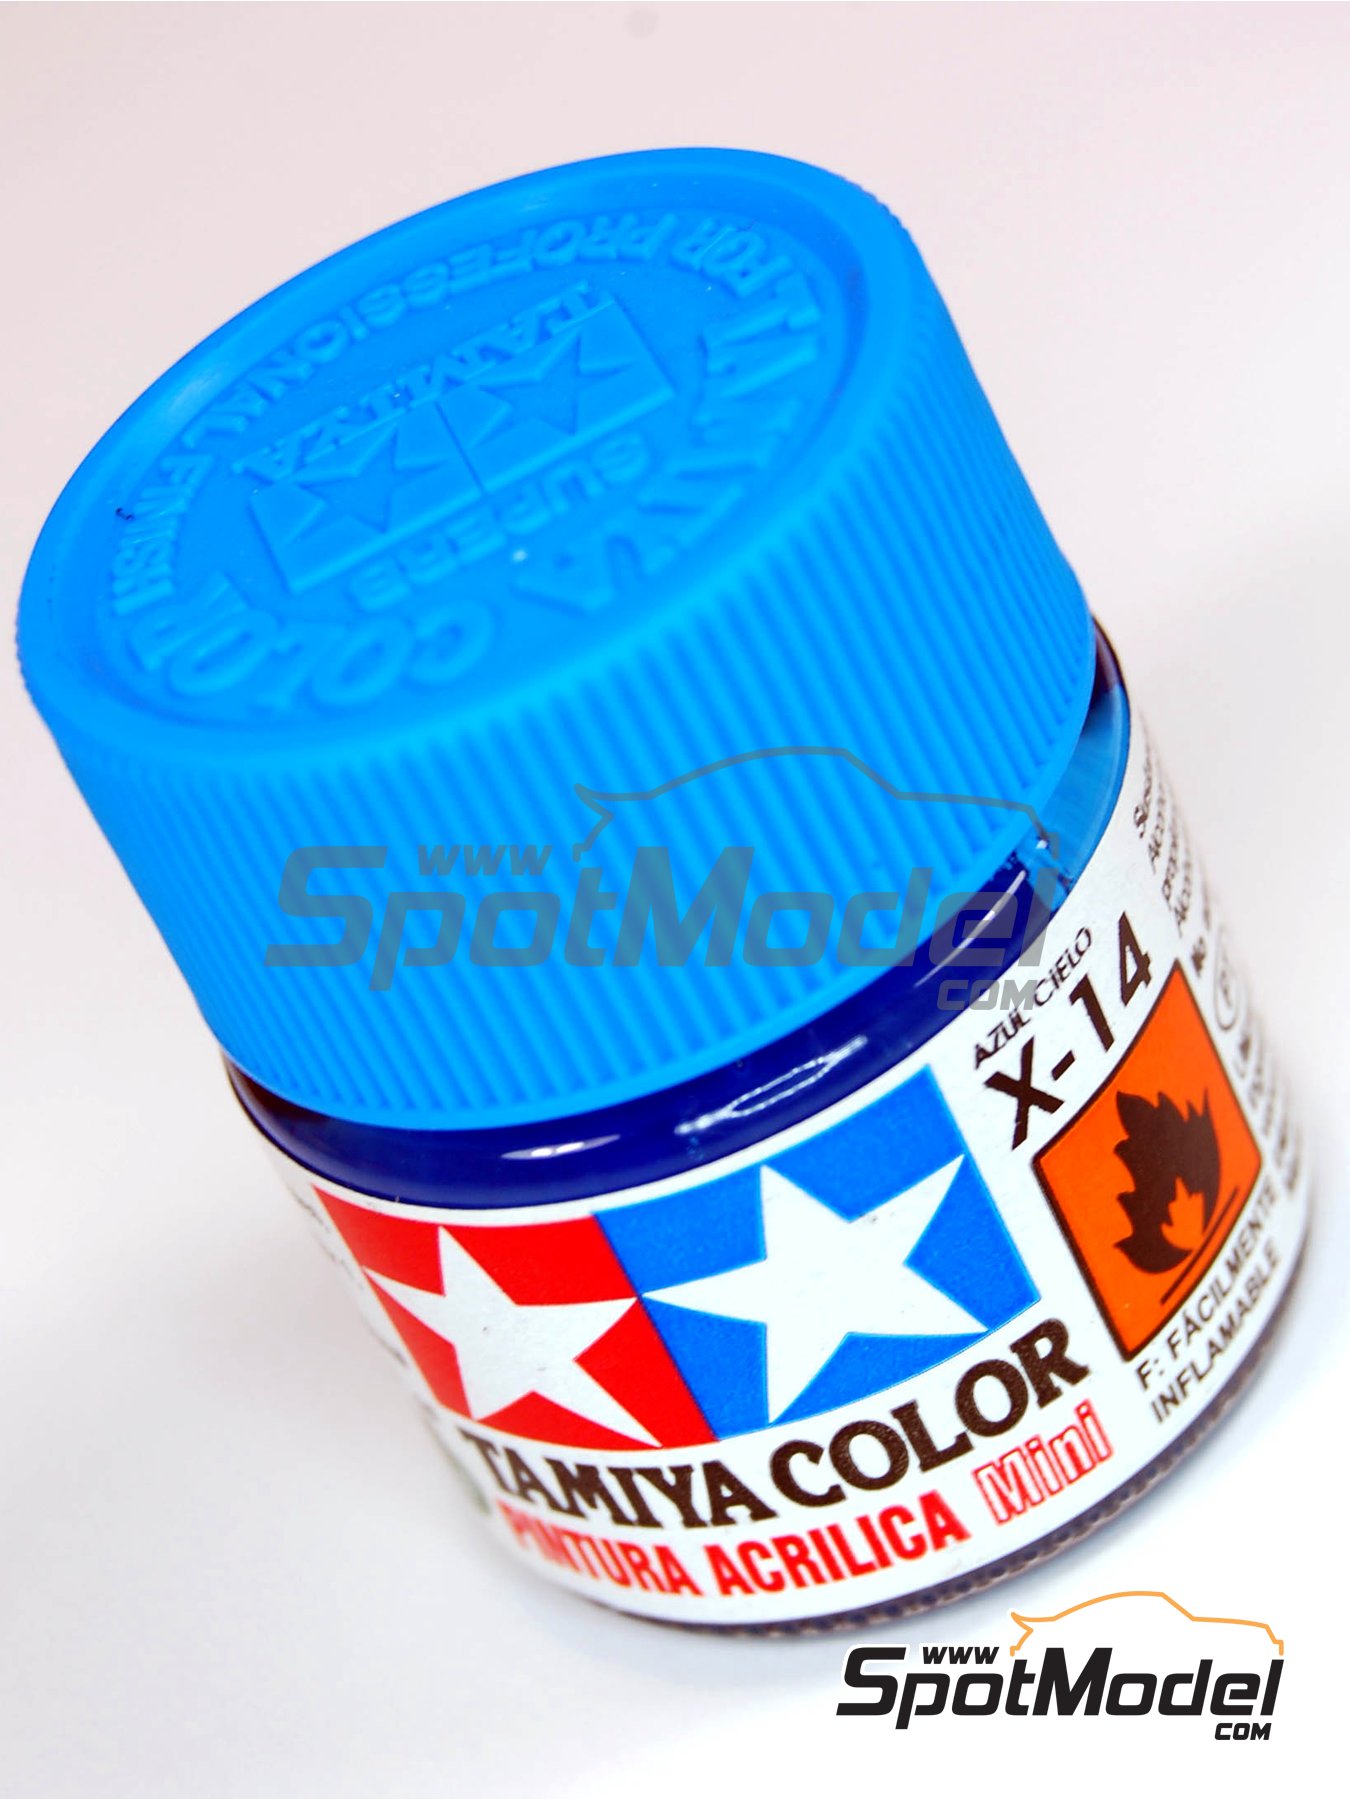 Tamiya X Acrylic Paint Thinner X-20A 250ml